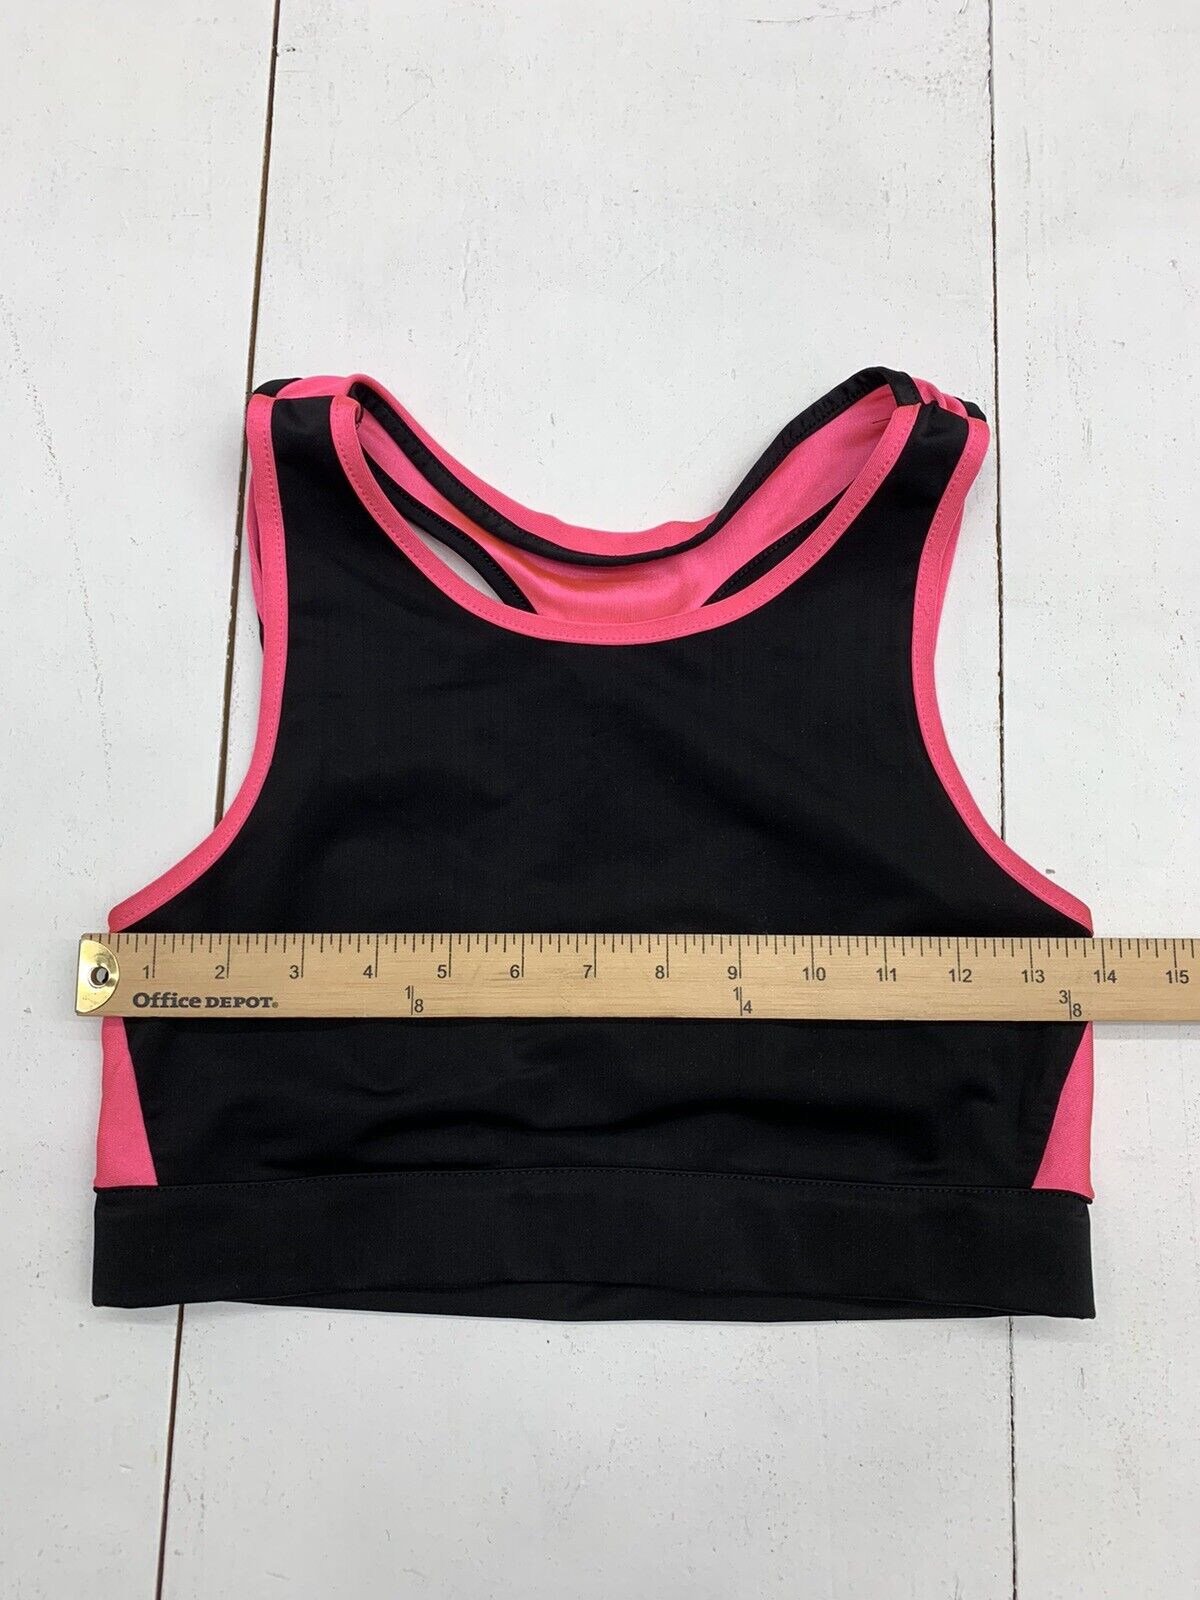 WitGirl womens Black Pink Sports Bra Size Medium - beyond exchange